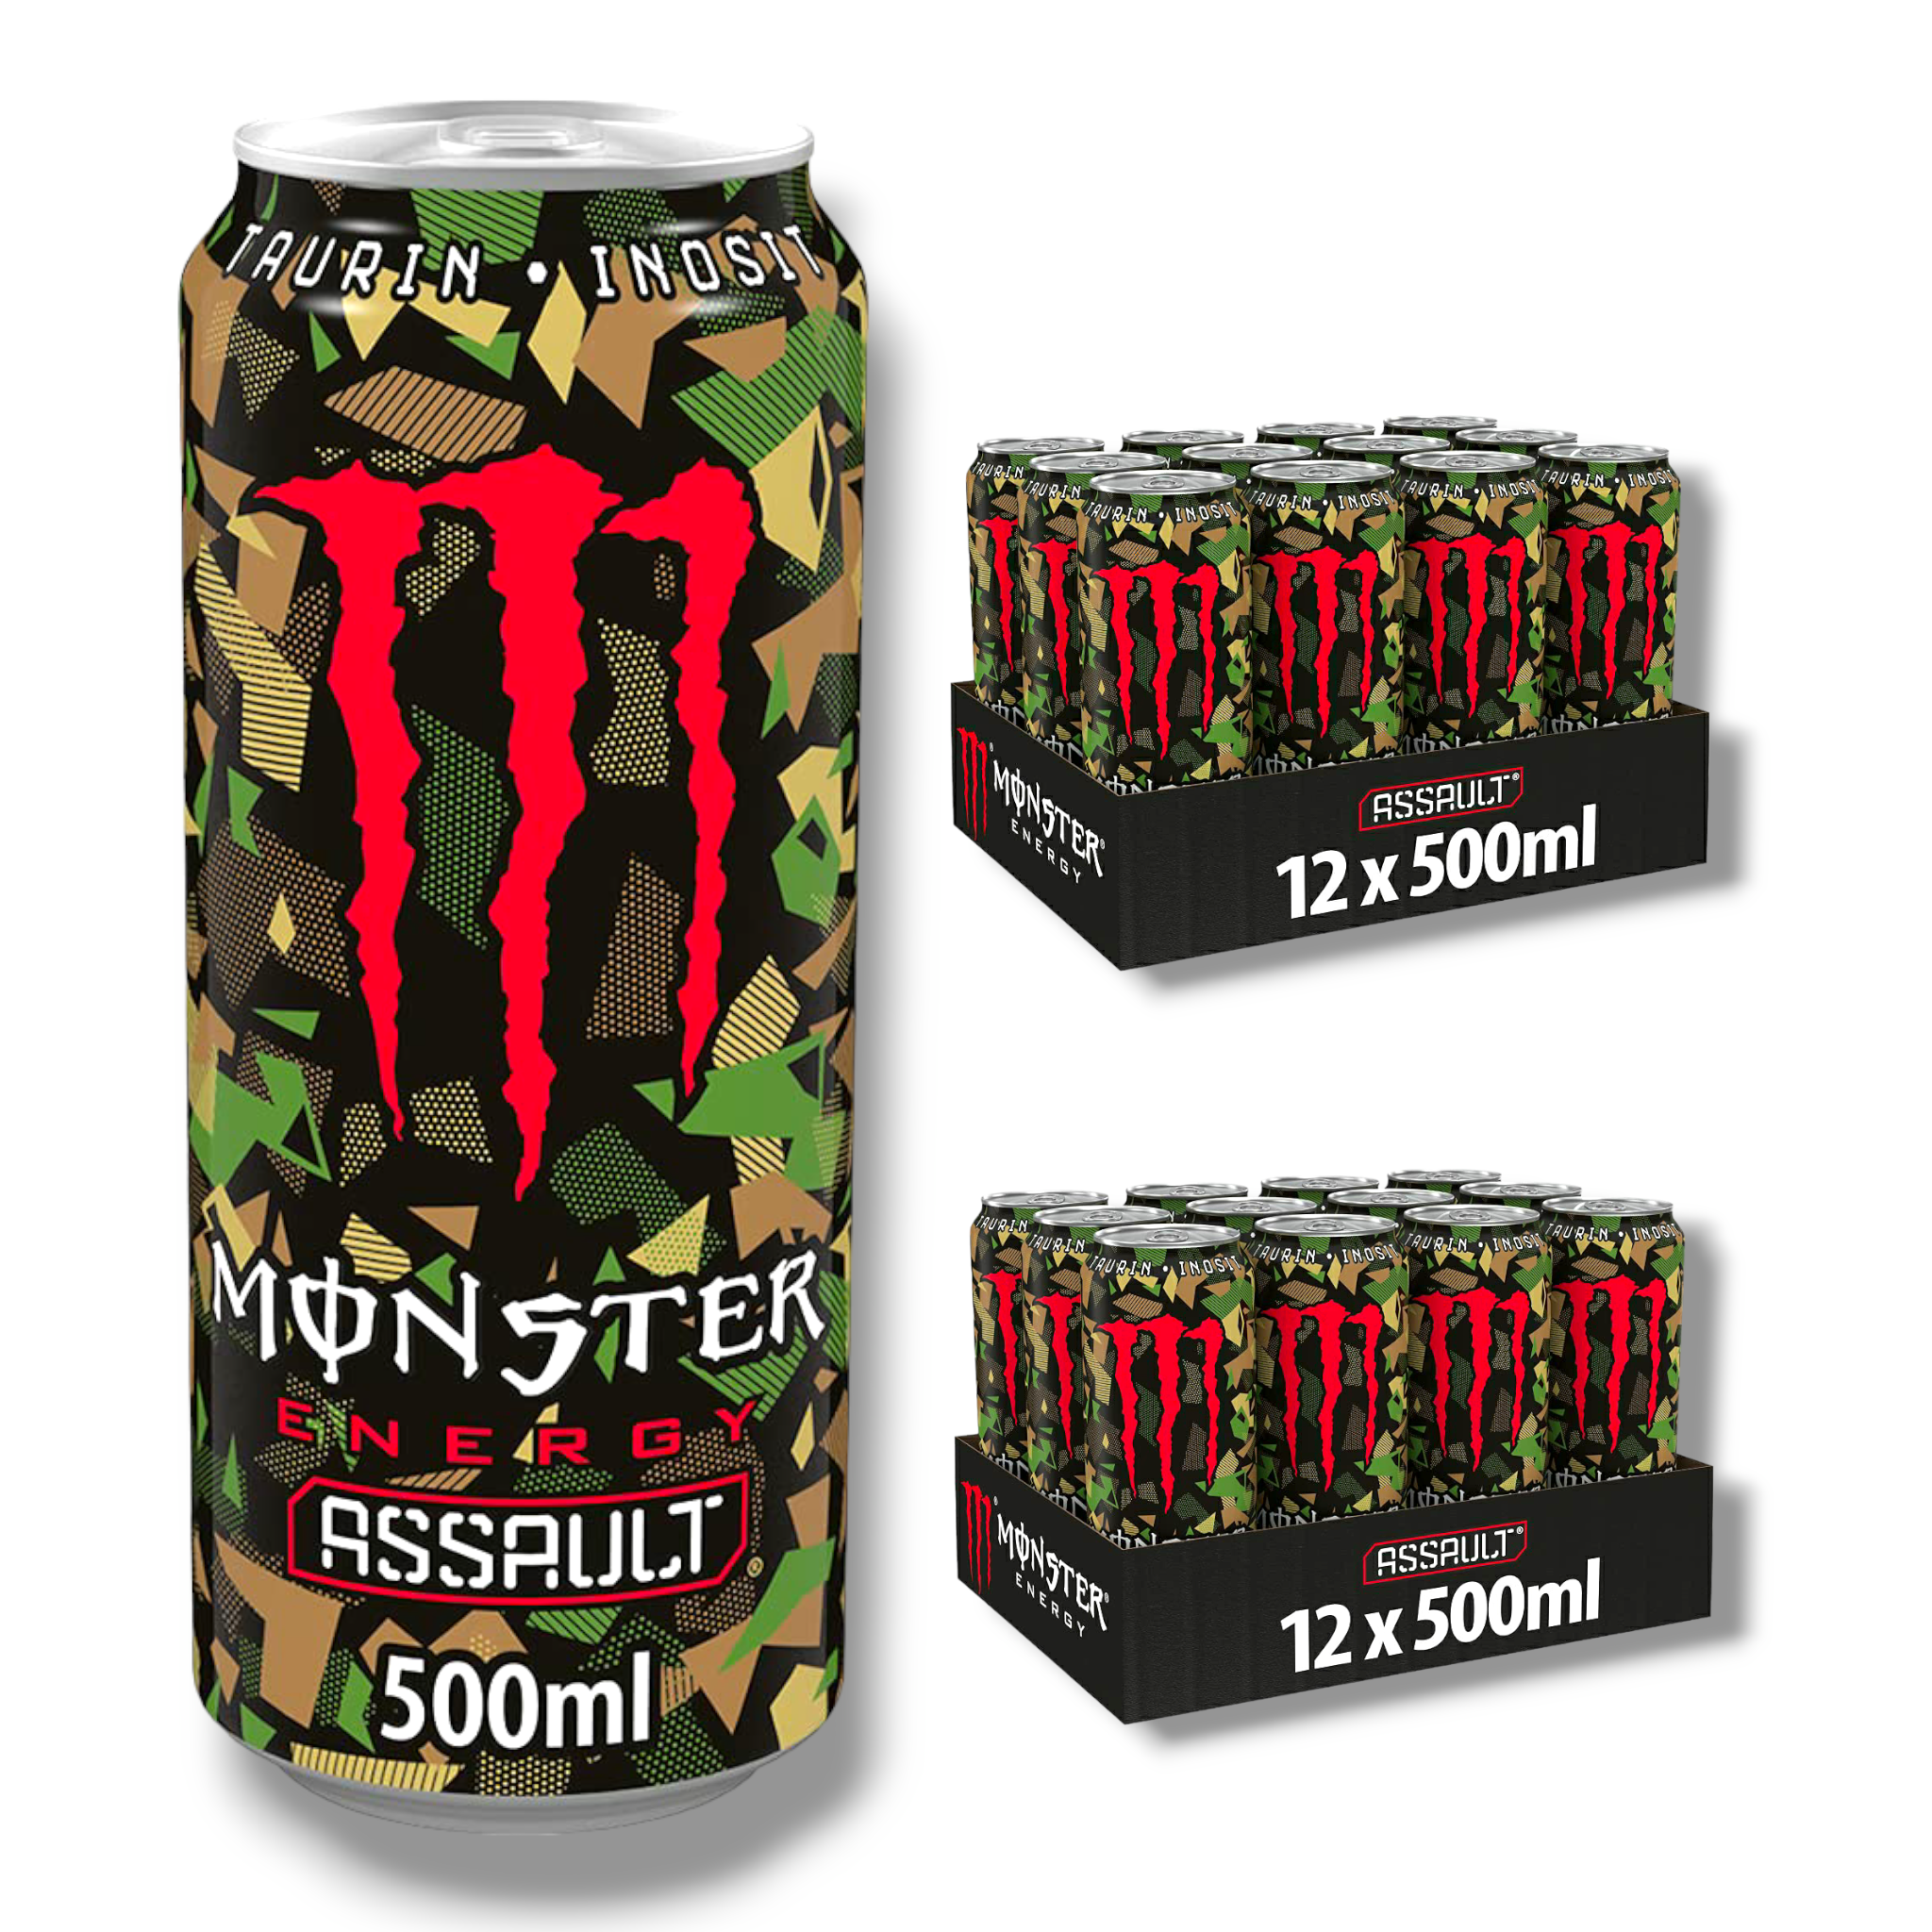 Monster Energy Assault 500ml - Energy + Taurin + Guarana